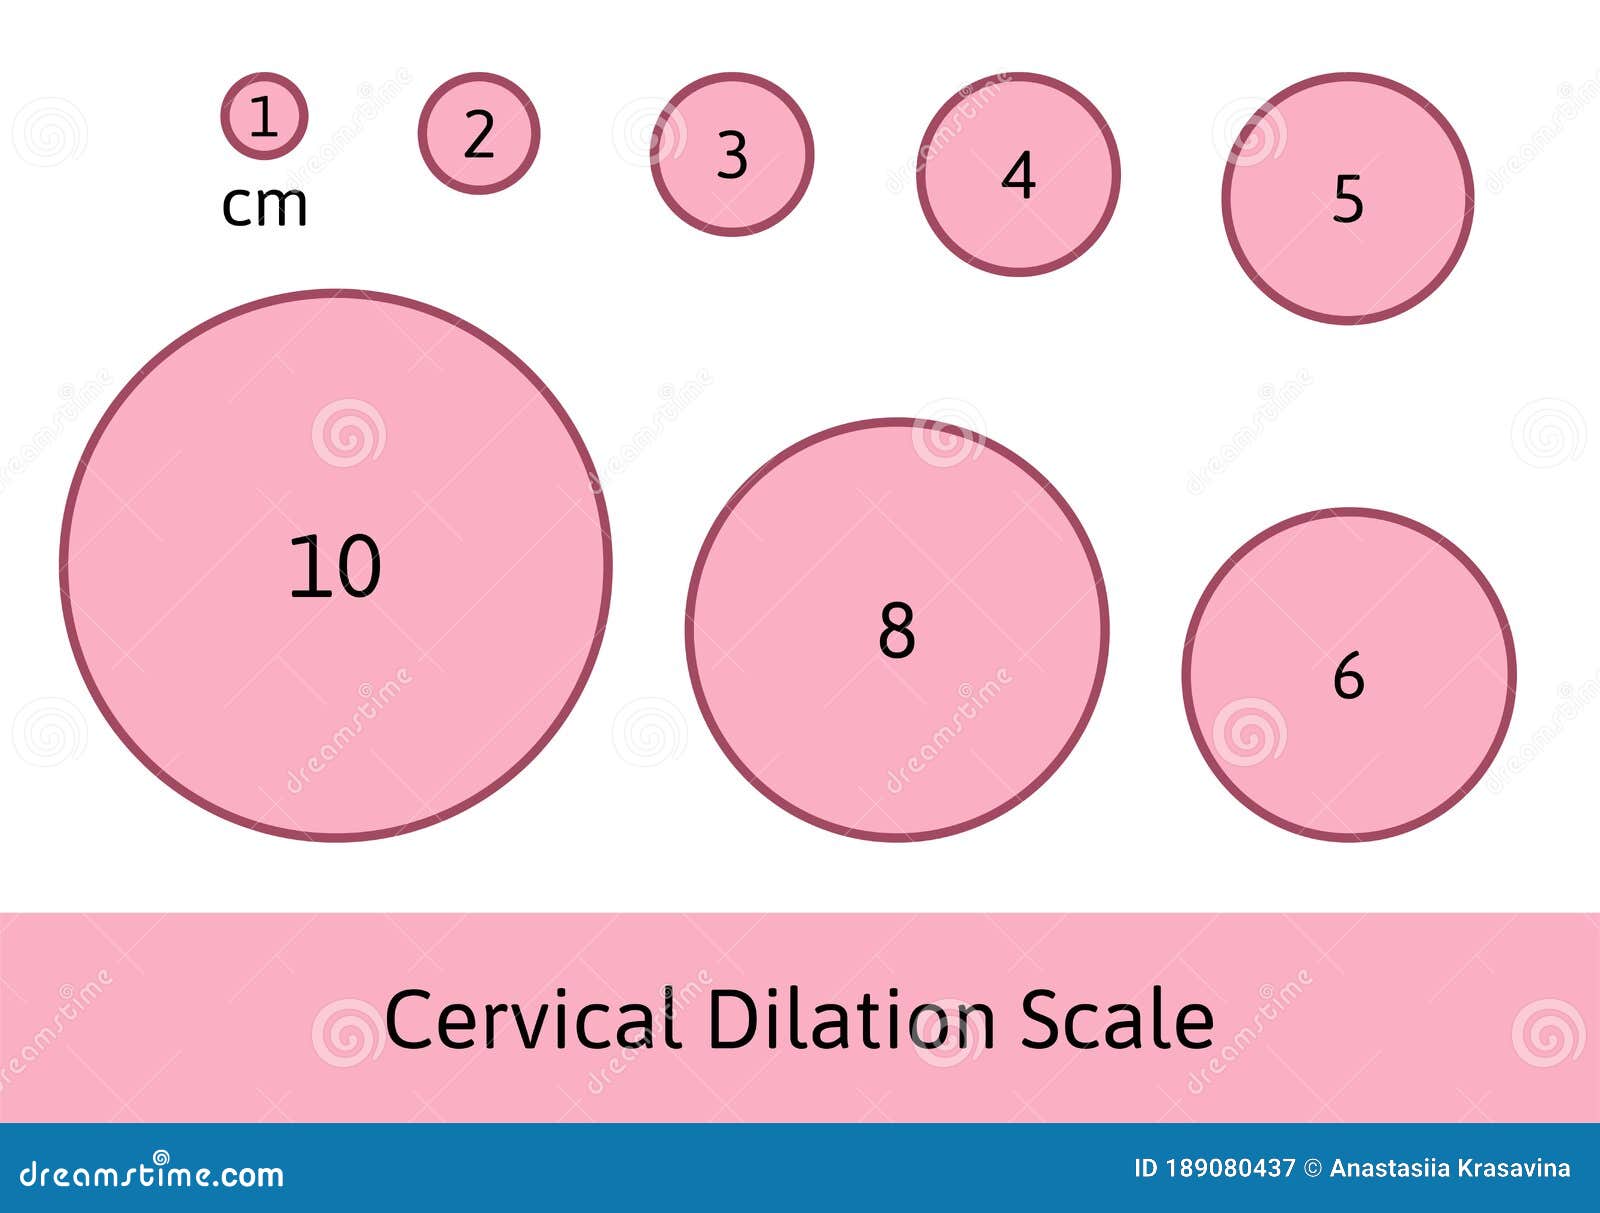 Cervical Dilation Chart Printable